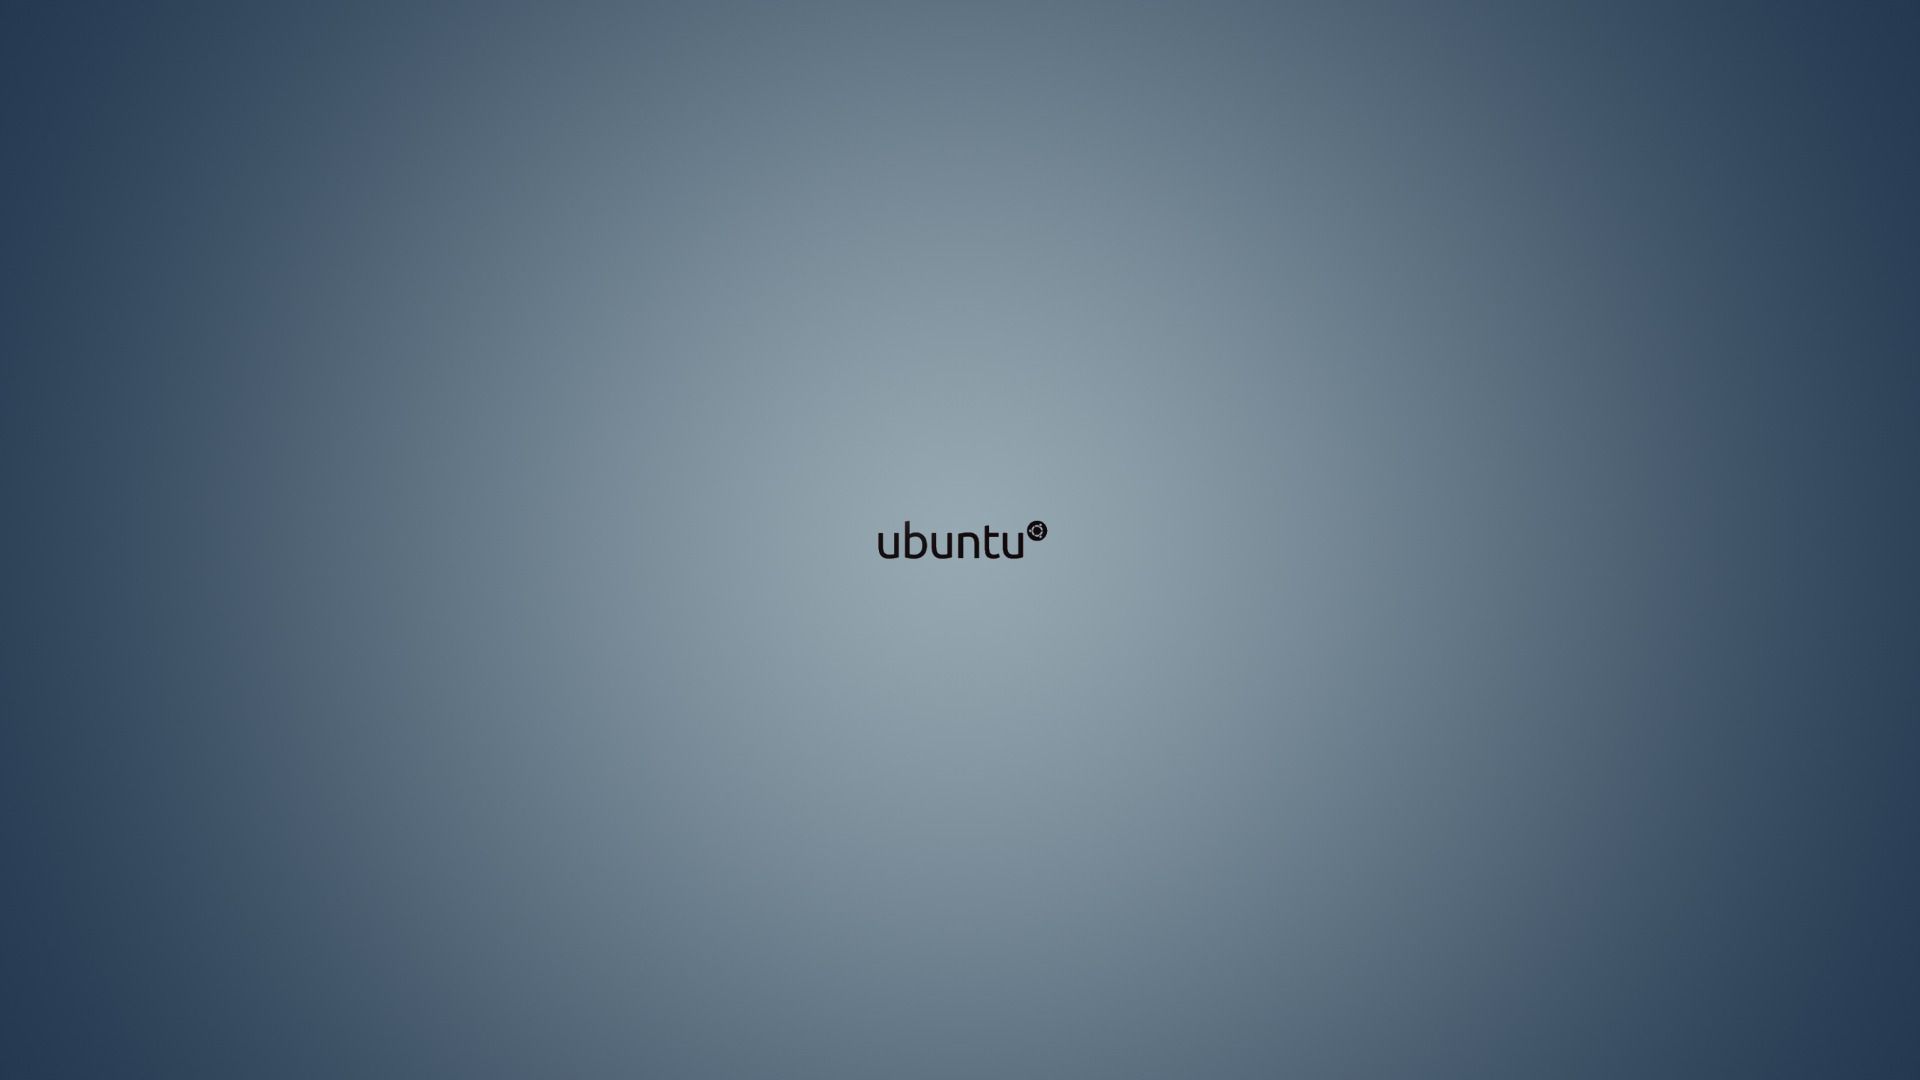 Ubuntu Wallpapers | Best Wallpapers